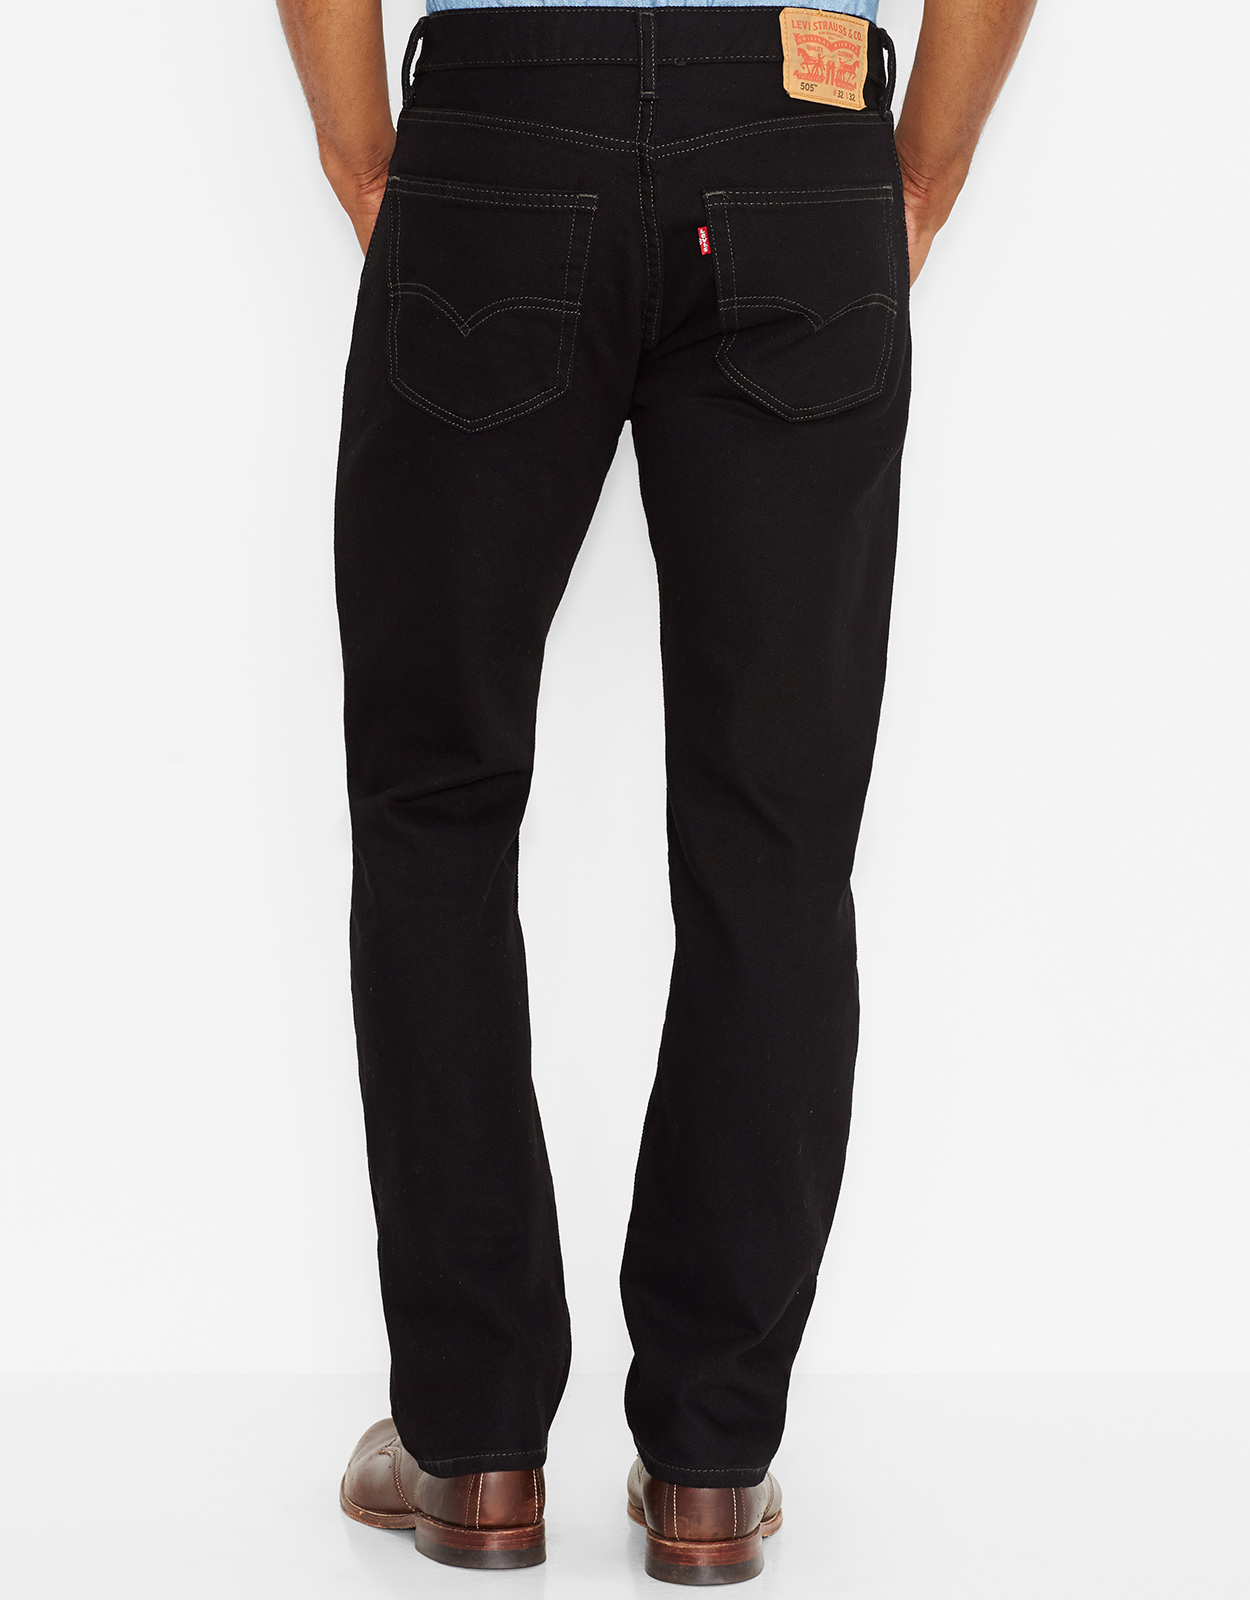 Levi's Men's 505 Regular Mid Rise Regular Fit Straight Leg Jeans - Black